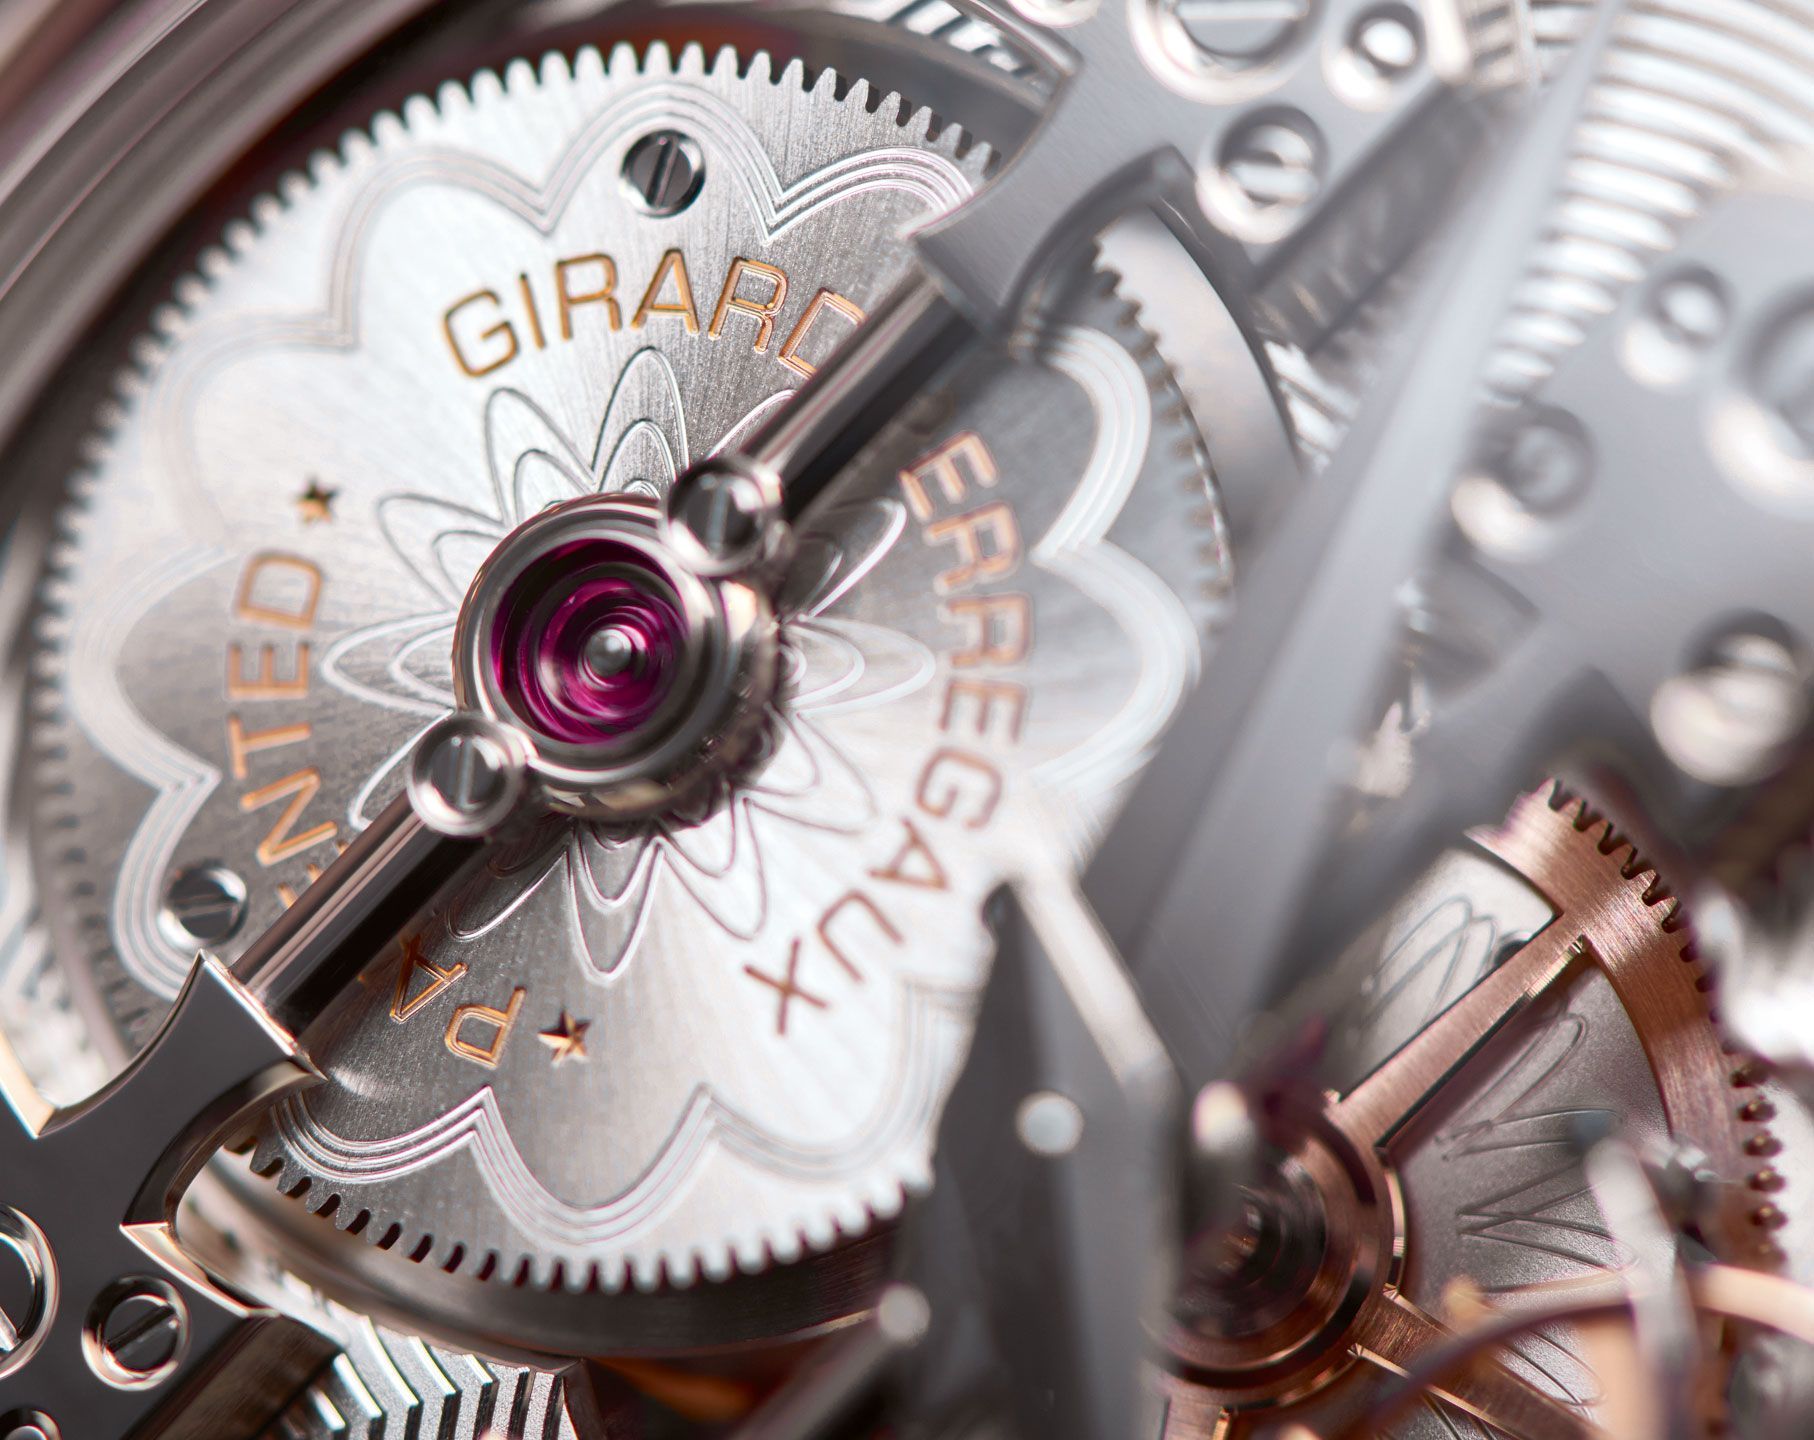 Girard-Perregaux Tourbillon 44 mm Watch in Skeleton Dial For Men - 3